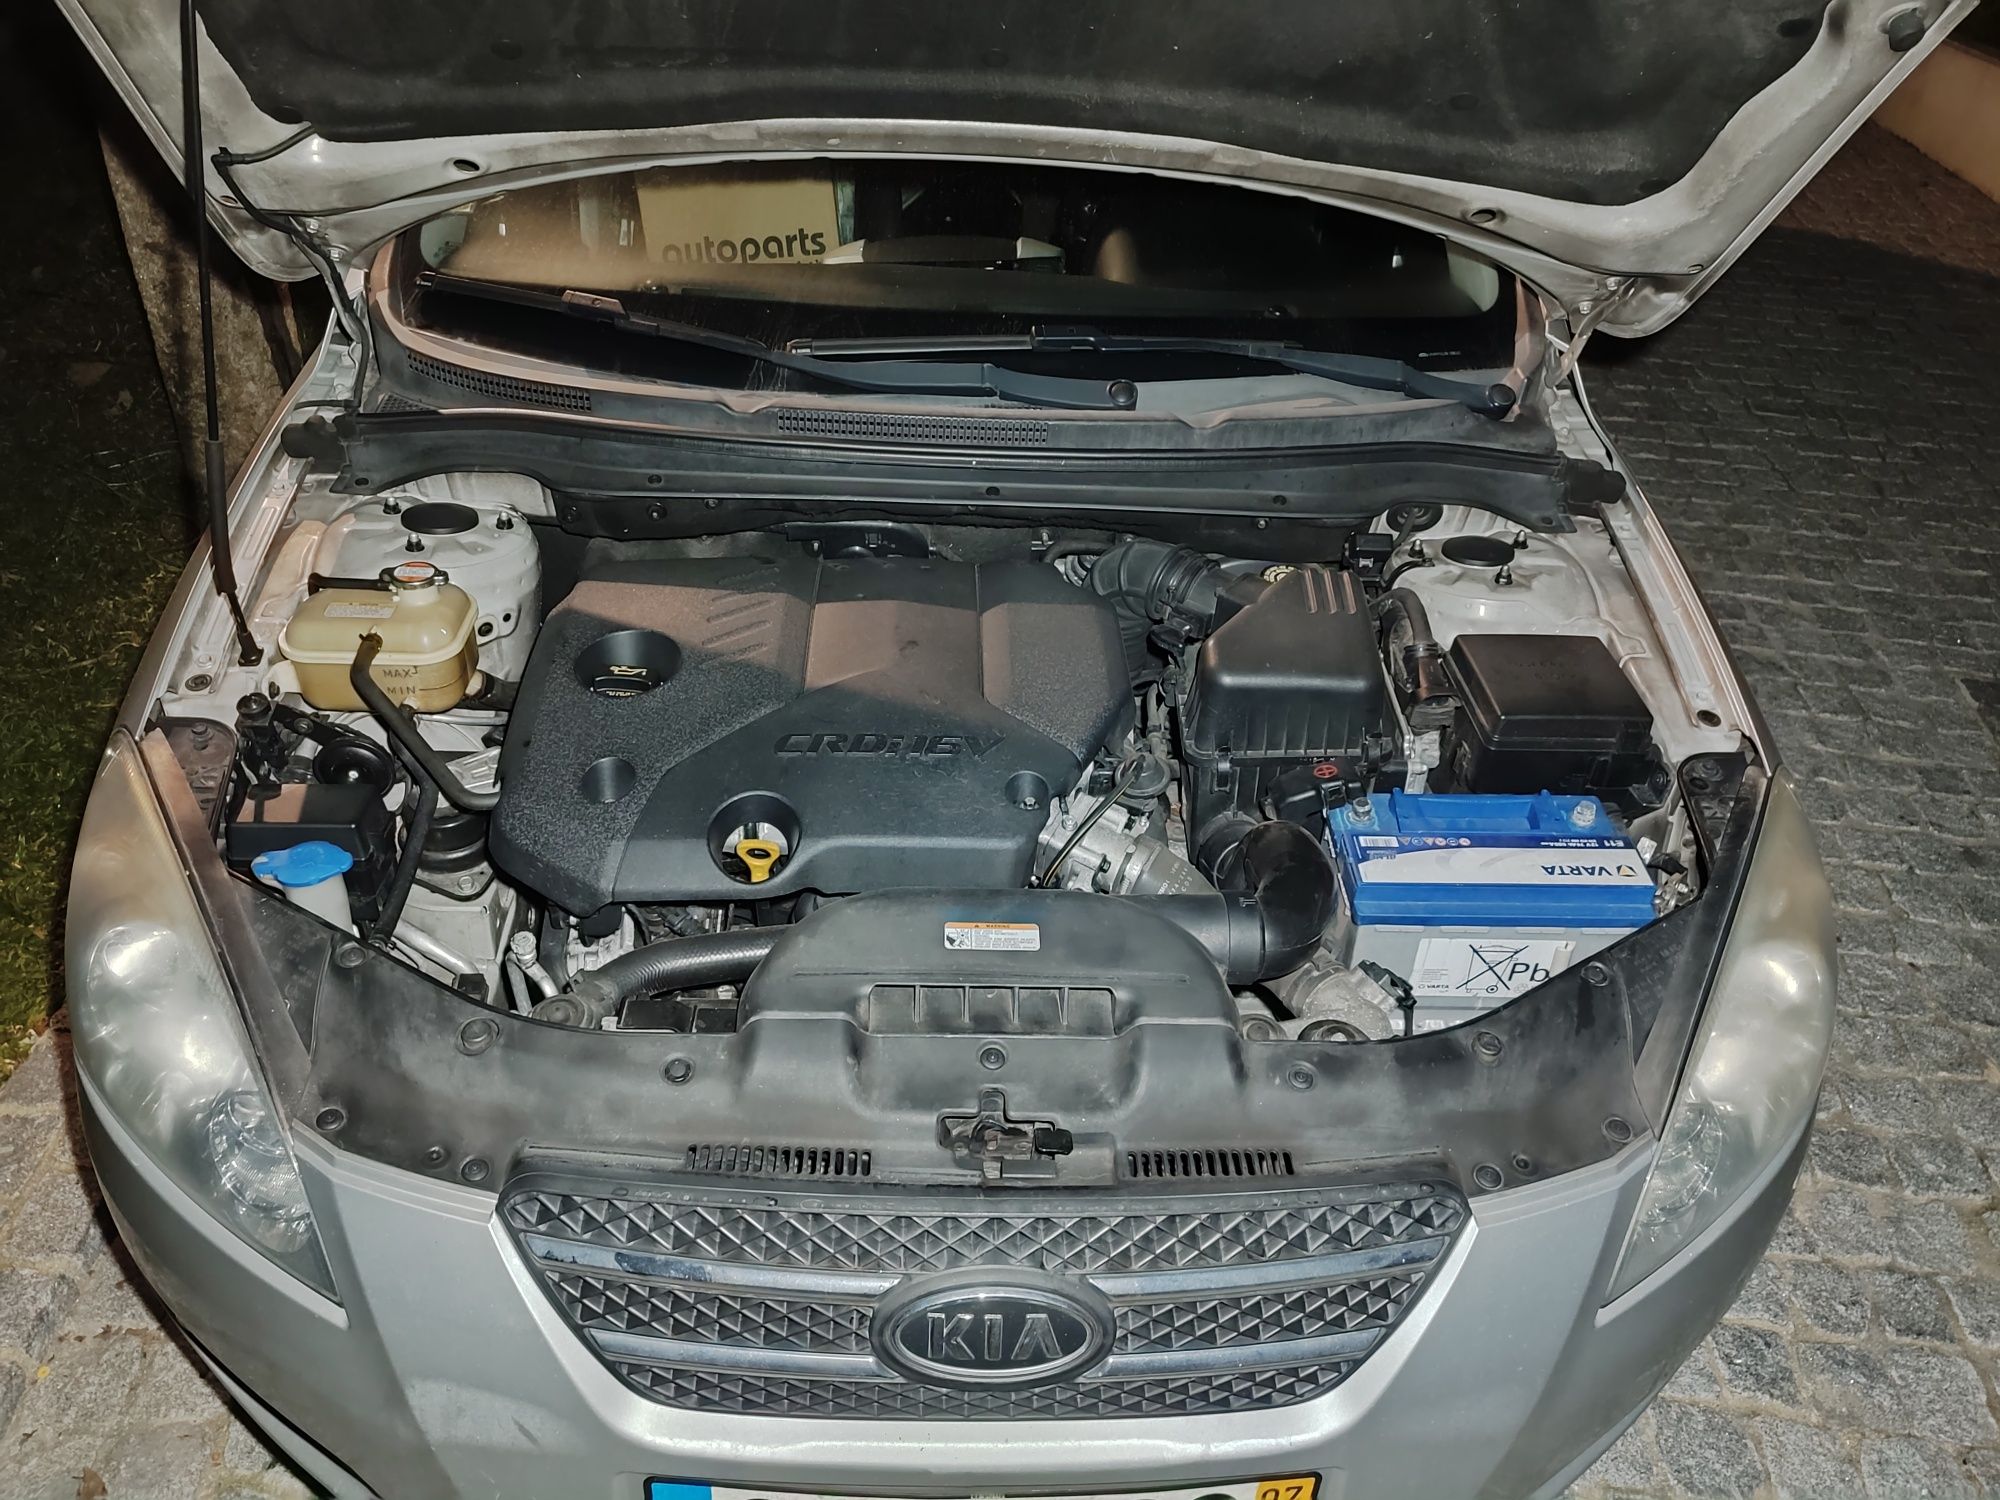 Motor Completo Kia/Hyundai 1.6 crdi 115cv + Caixa 5 Vel.